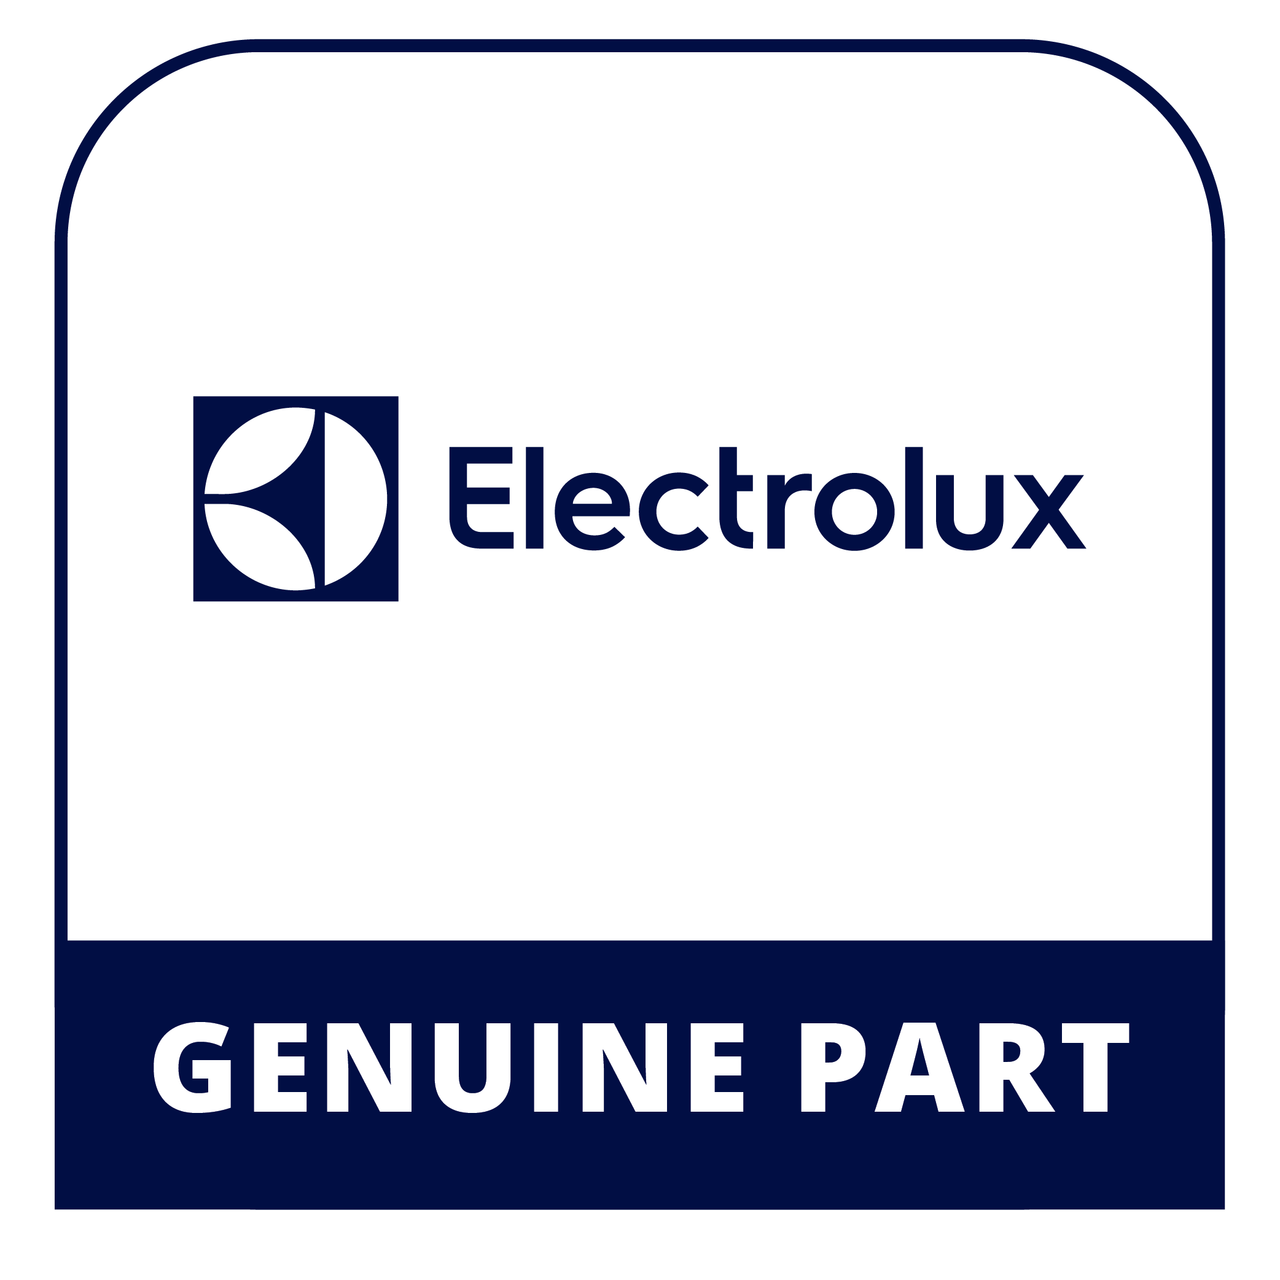 Frigidaire - Electrolux 131212301 - Capacitor - Genuine Electrolux Part